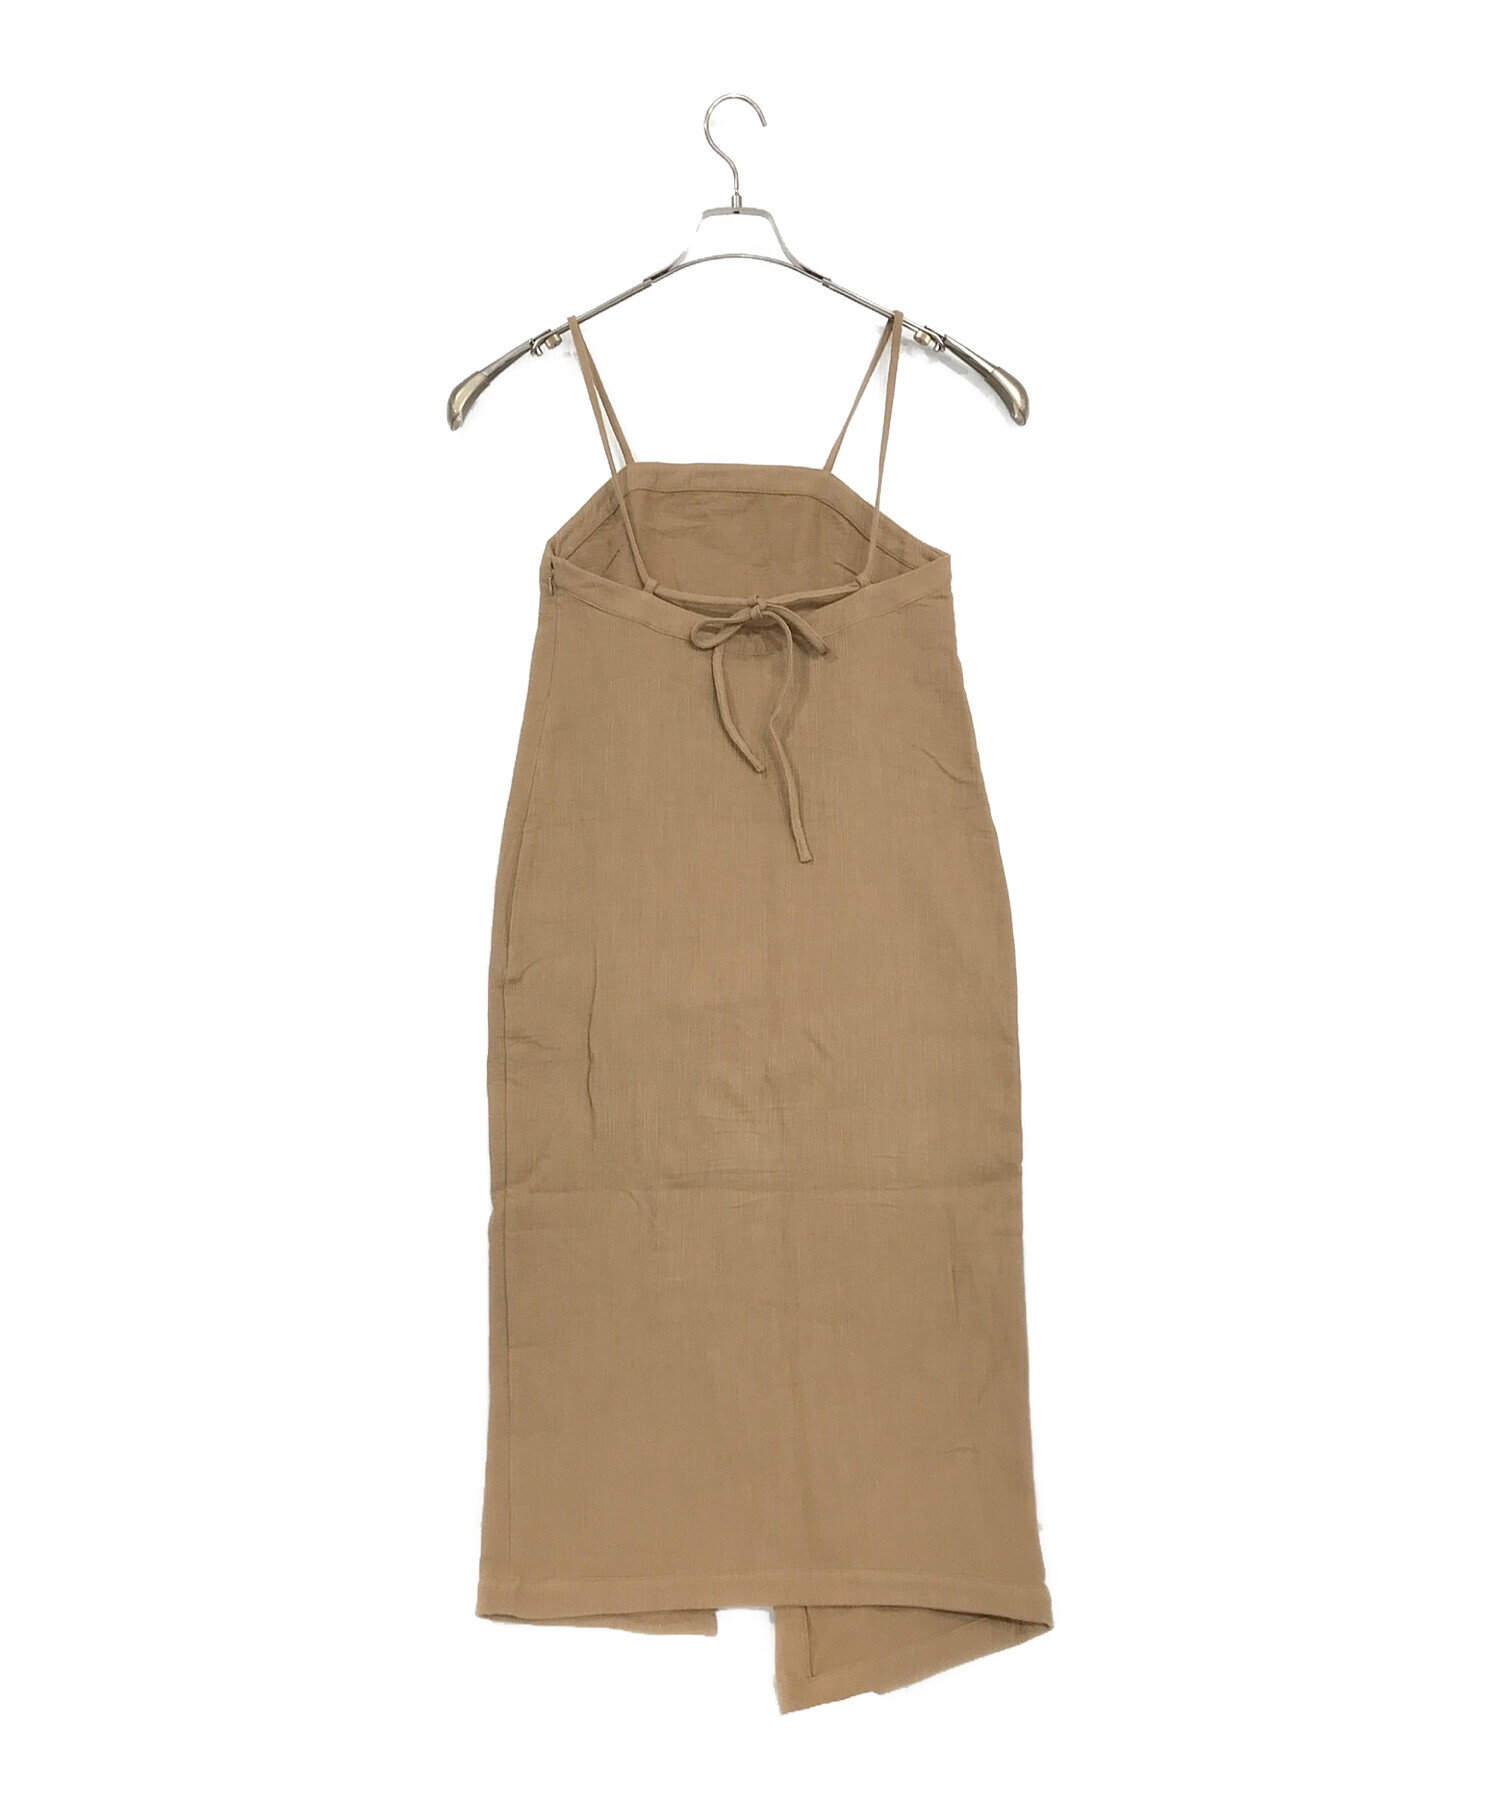 6,880円Hem Slit Camisole Dress  alexia stam